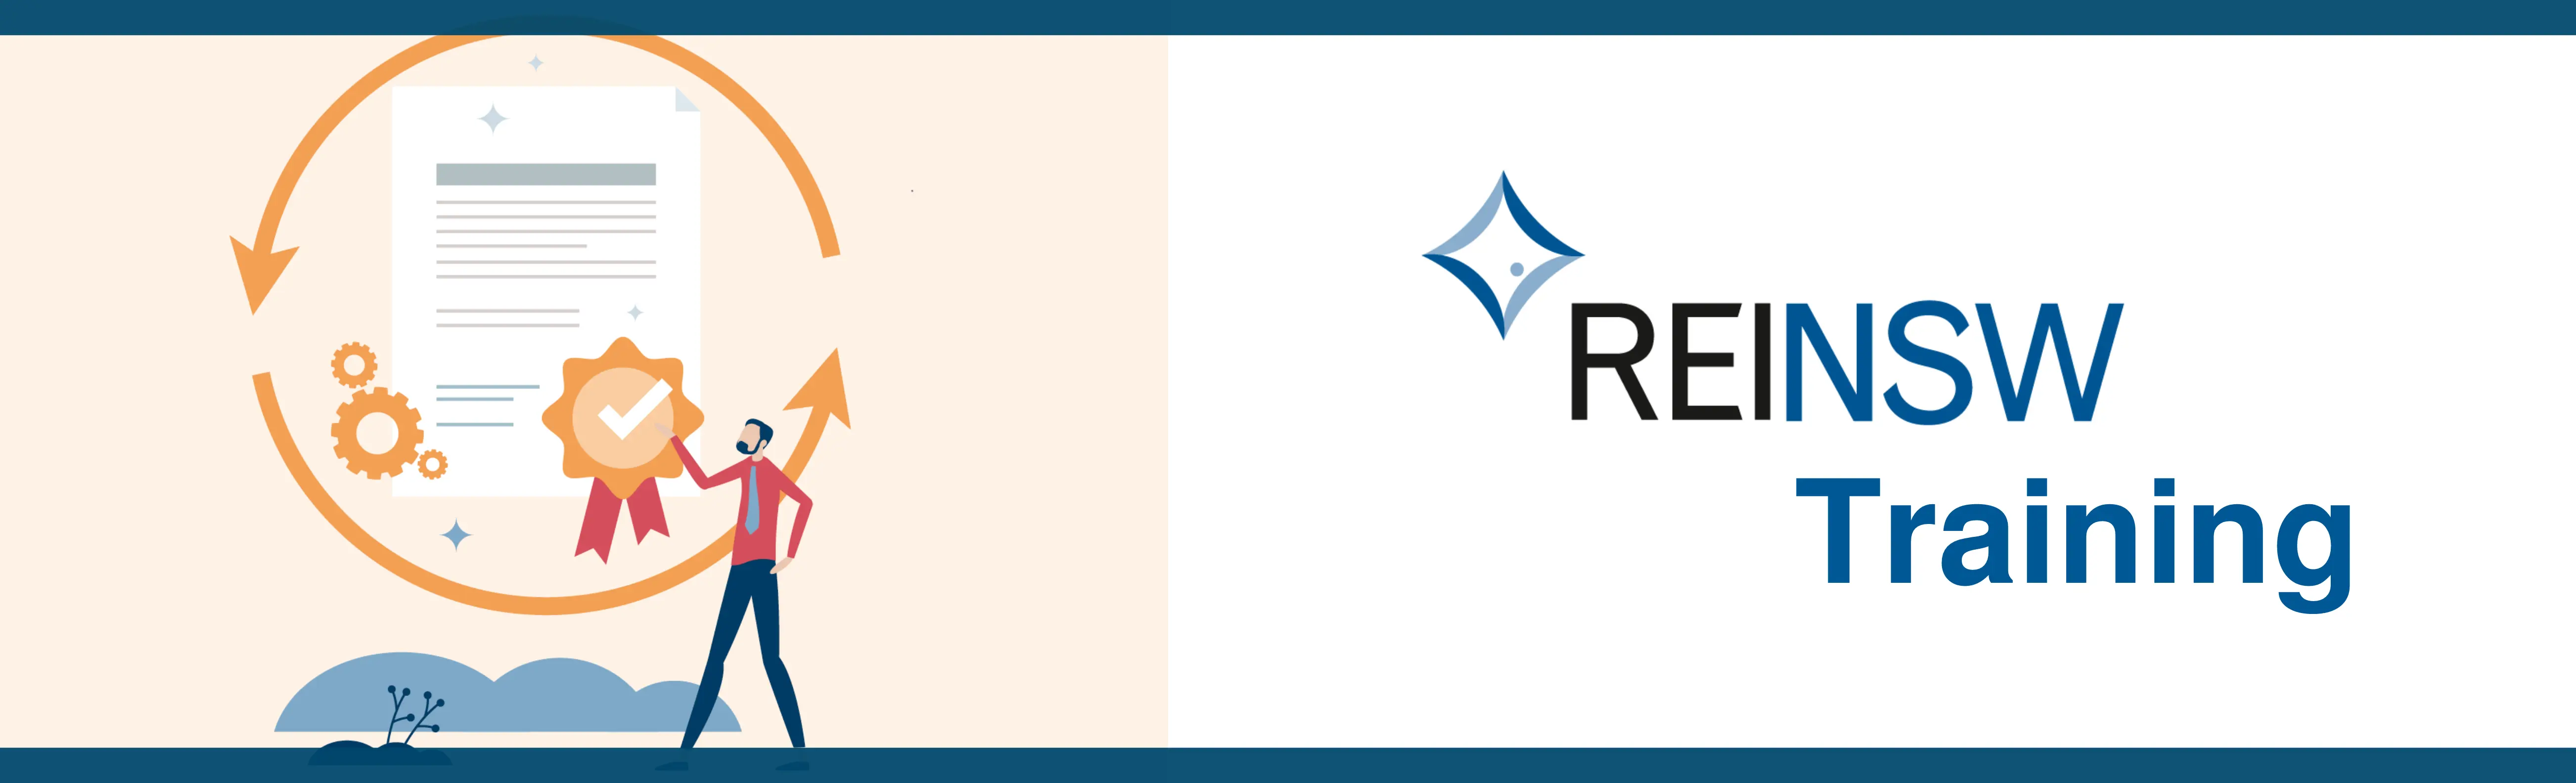 REINSW training - Certificate holders news